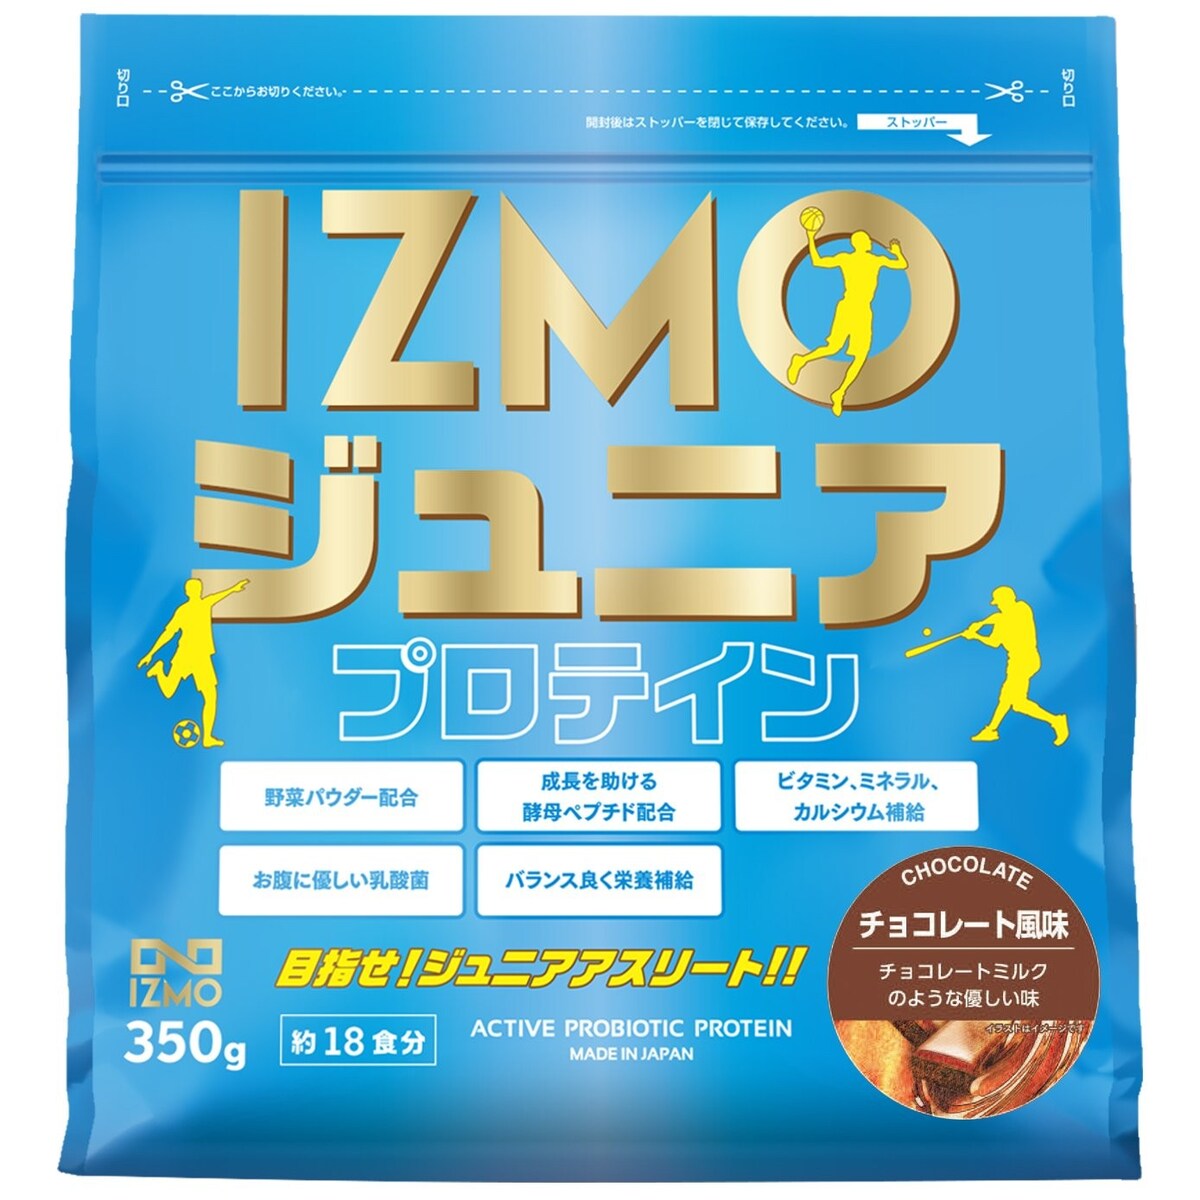  IZMO ジュニアプロテイン チョコレート風味画像2 